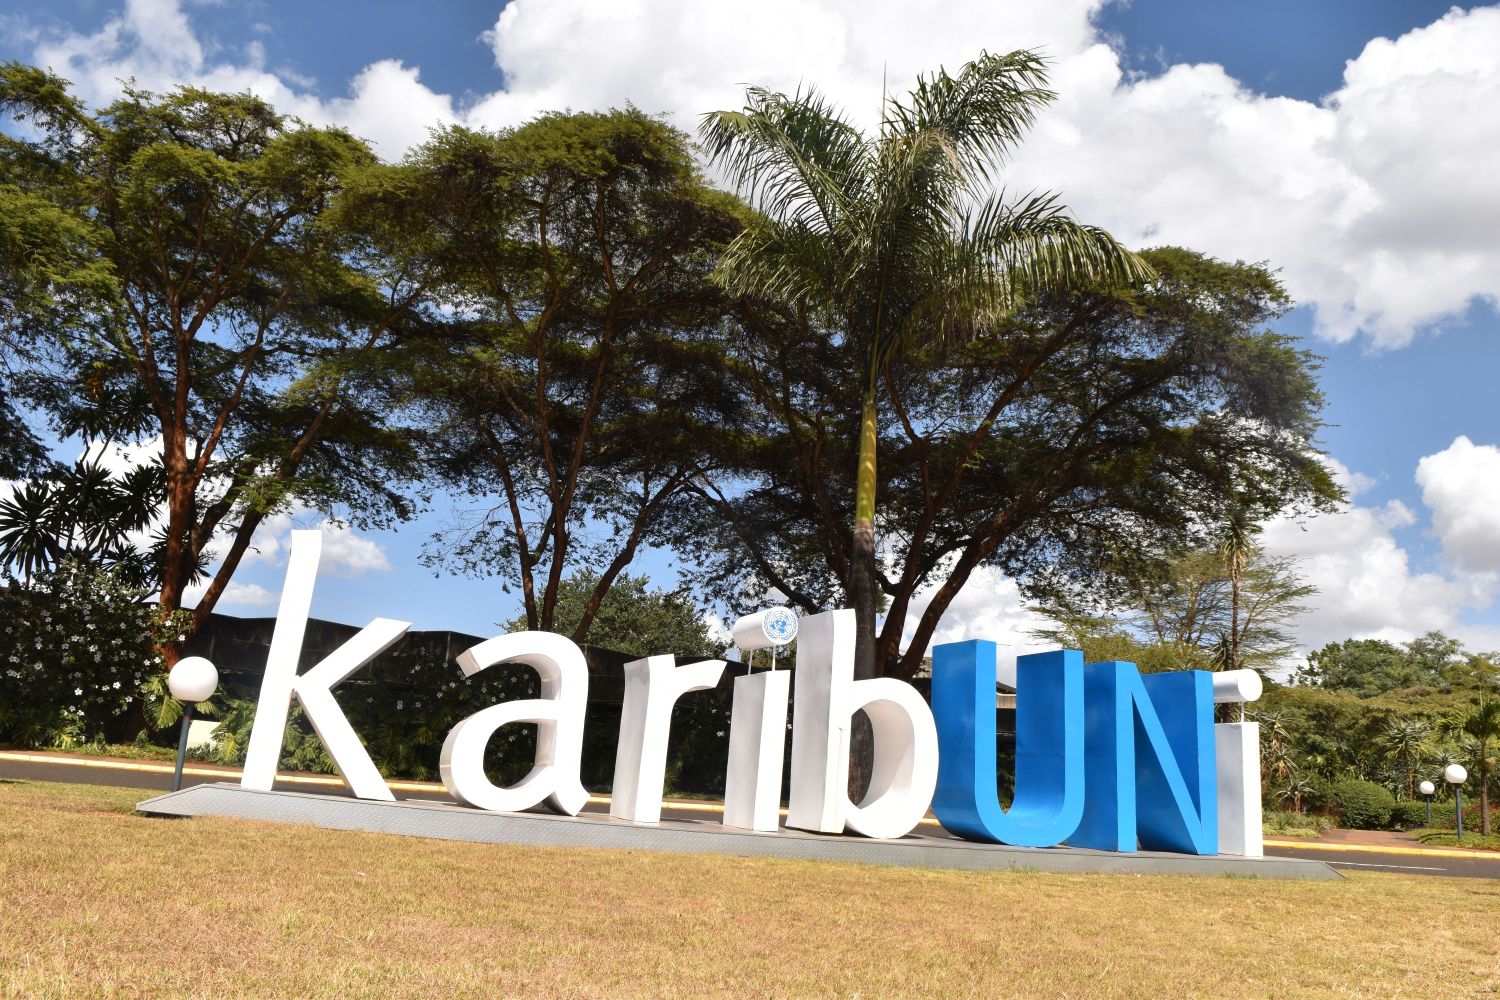 Karibuni: Visit the United Nations in Africa!